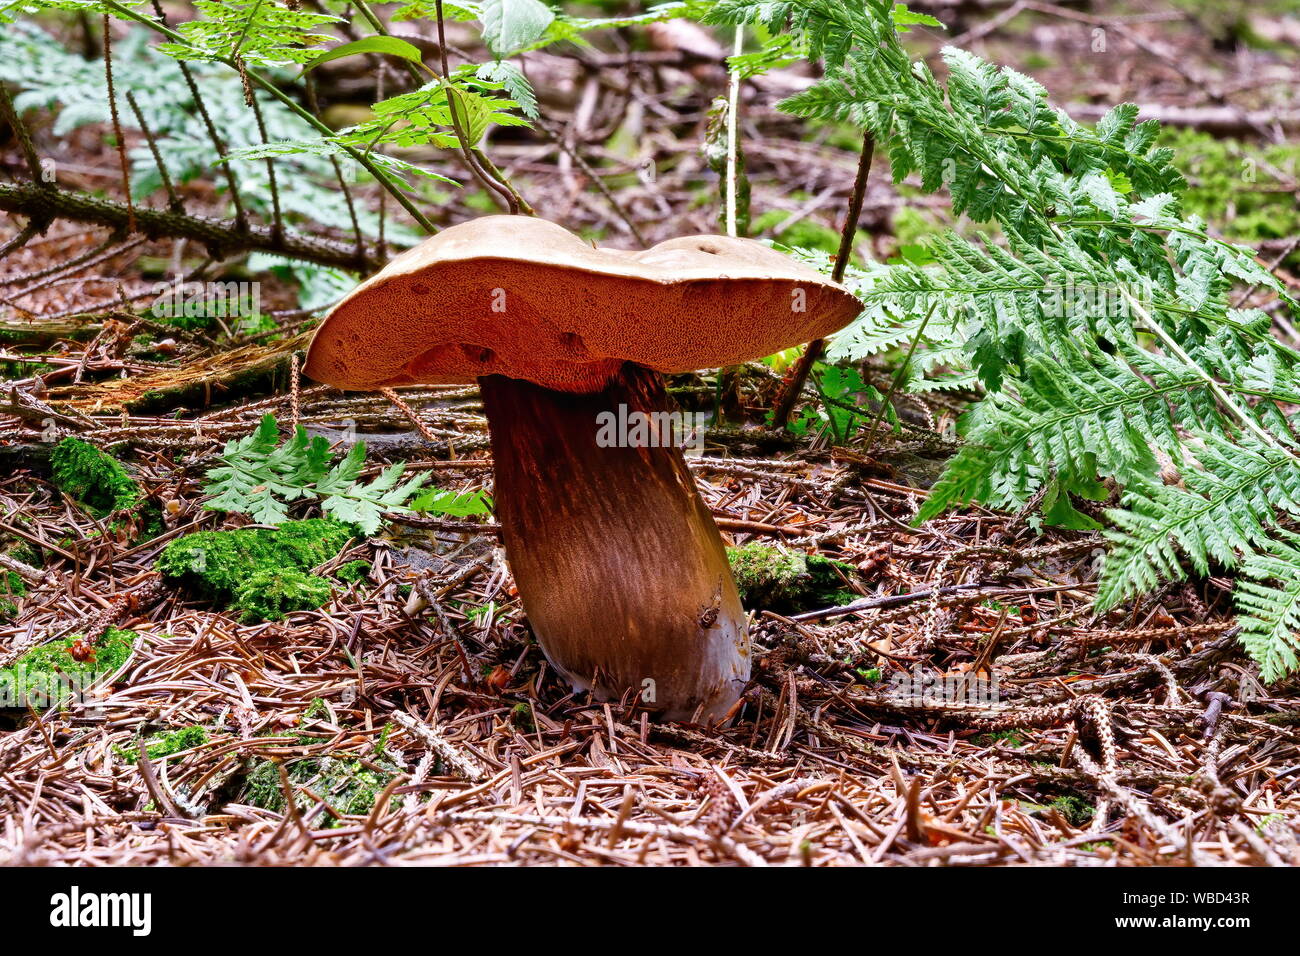 Edible mushrooms with excellent taste, Porphyrellus porphyrosporus Stock Photo